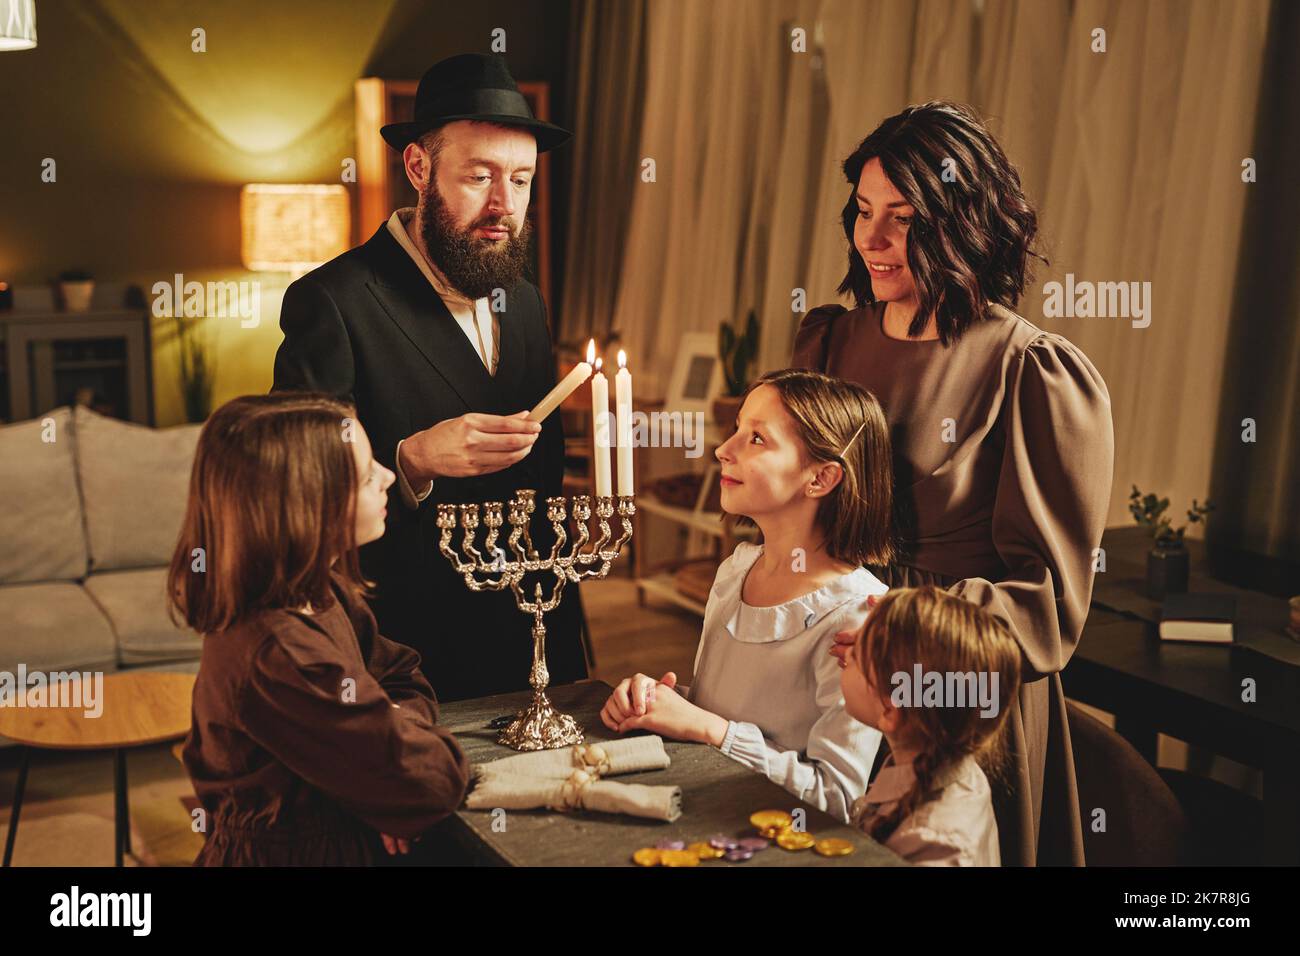 Portrait of orthodox jewish family lighting menorah candle together during Hanukkah celebration Stock Photo